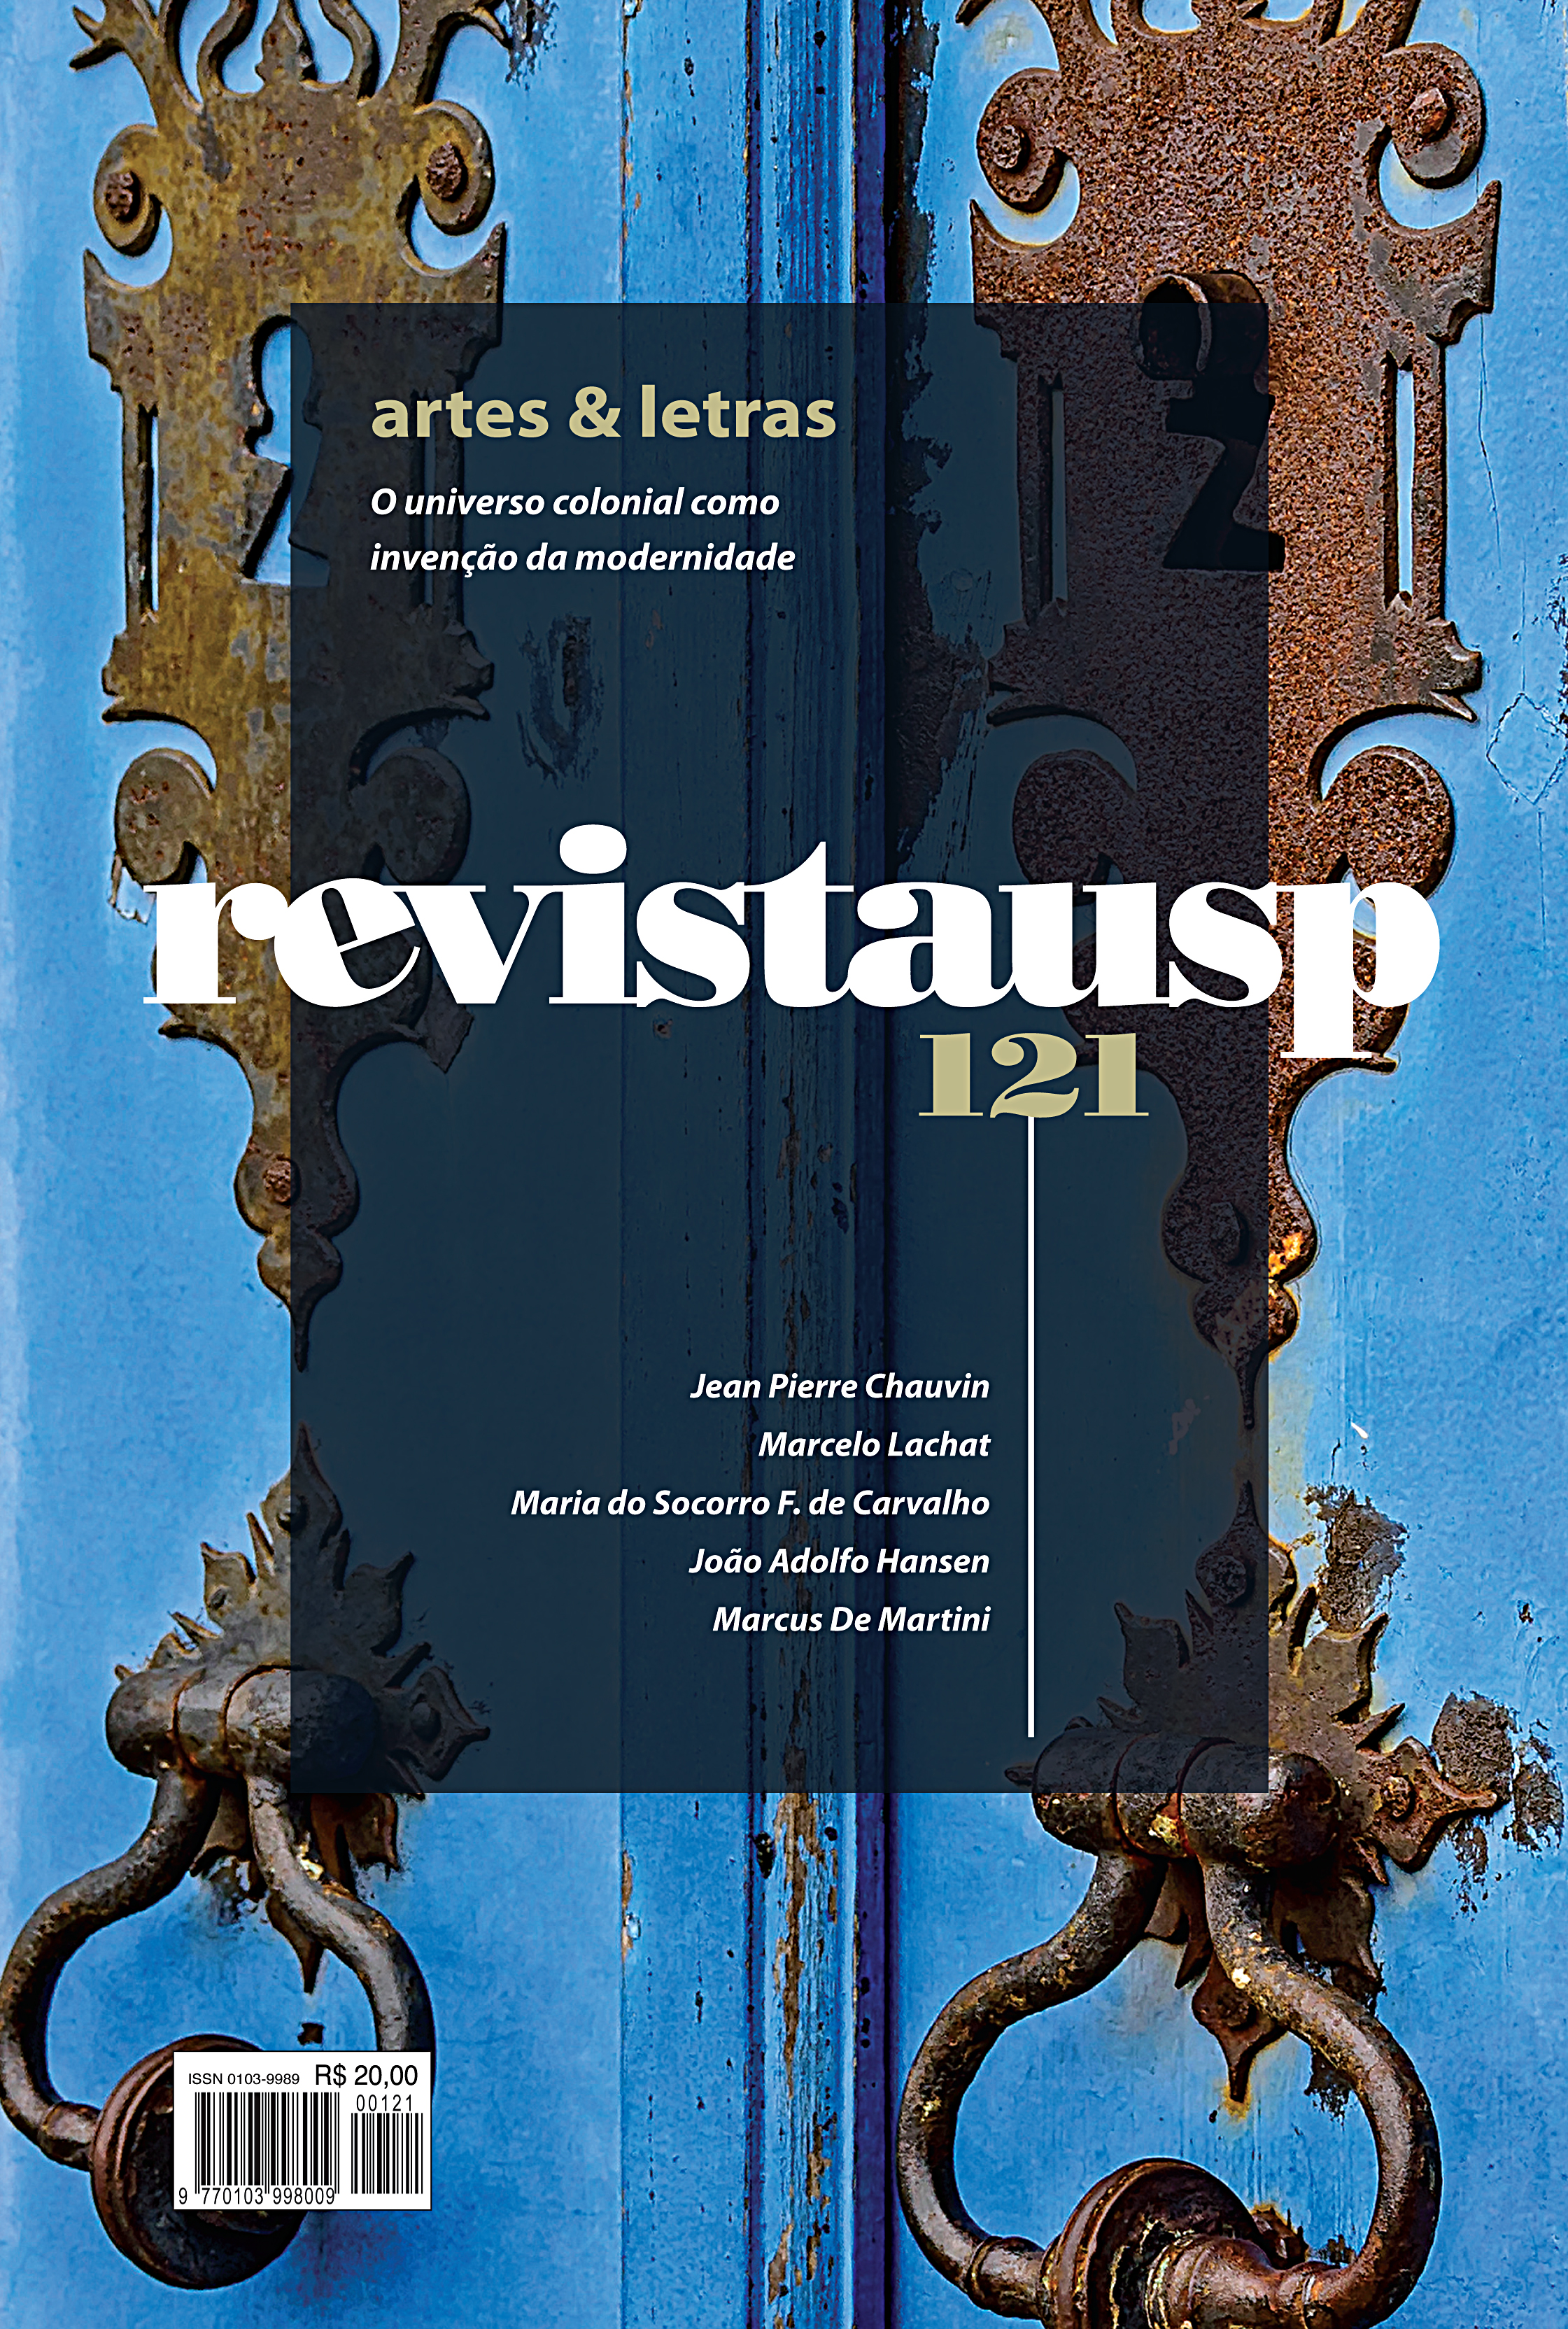 					Visualizar n. 121 (2019): Dossiê artes & letras
				